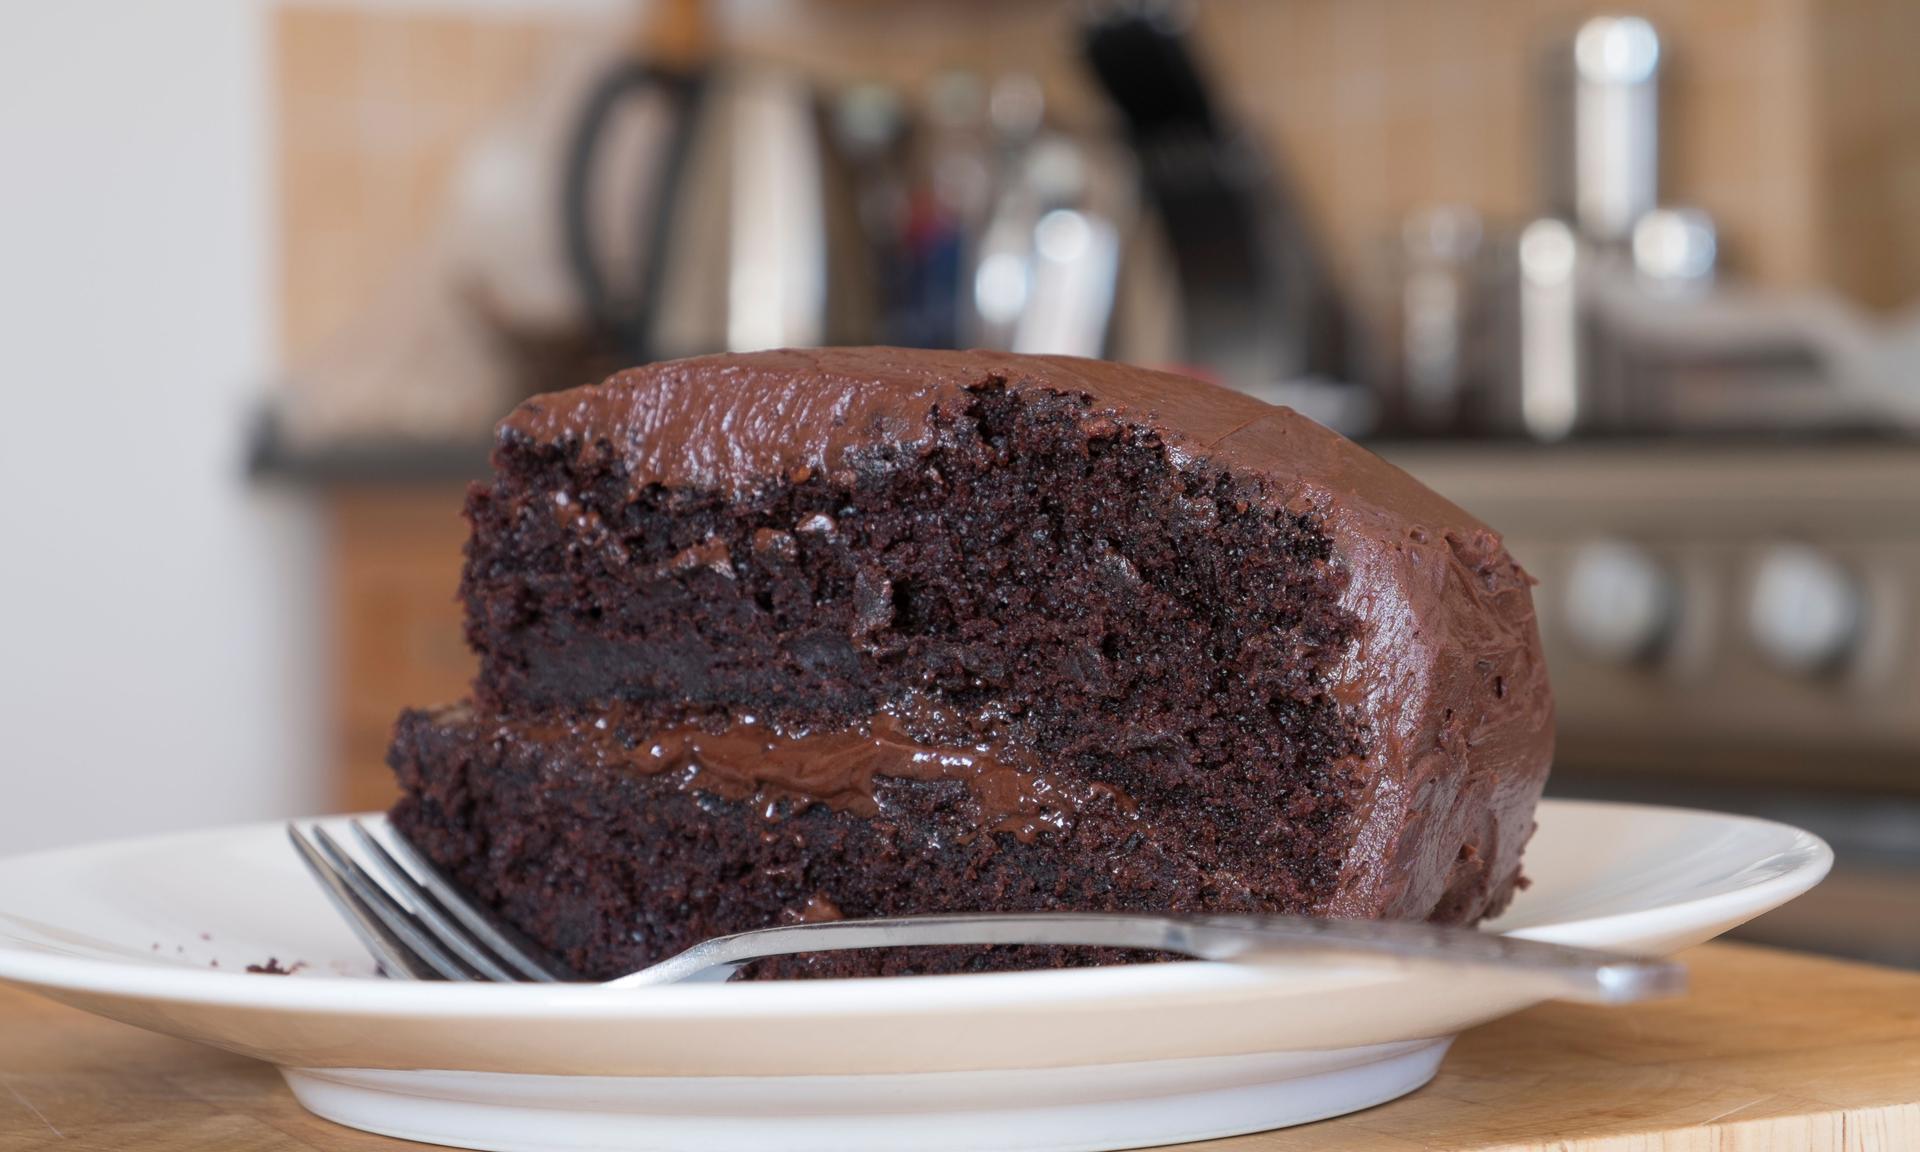 A moist chocolate cake.